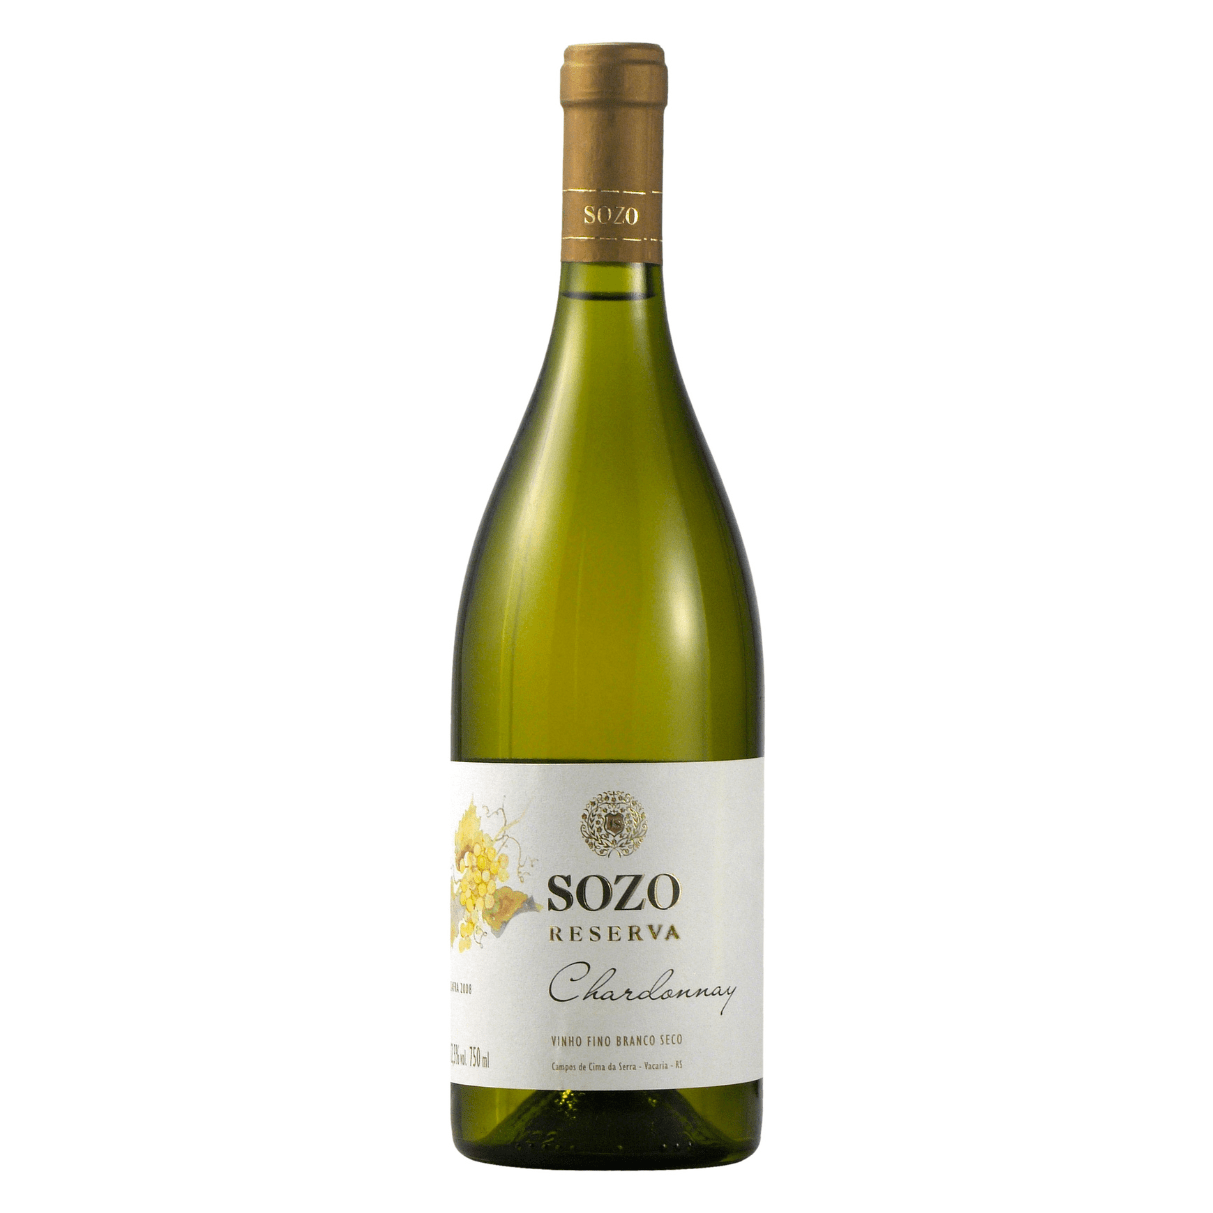 SOZO Reserva Chardonnay 2015 (Barricado)